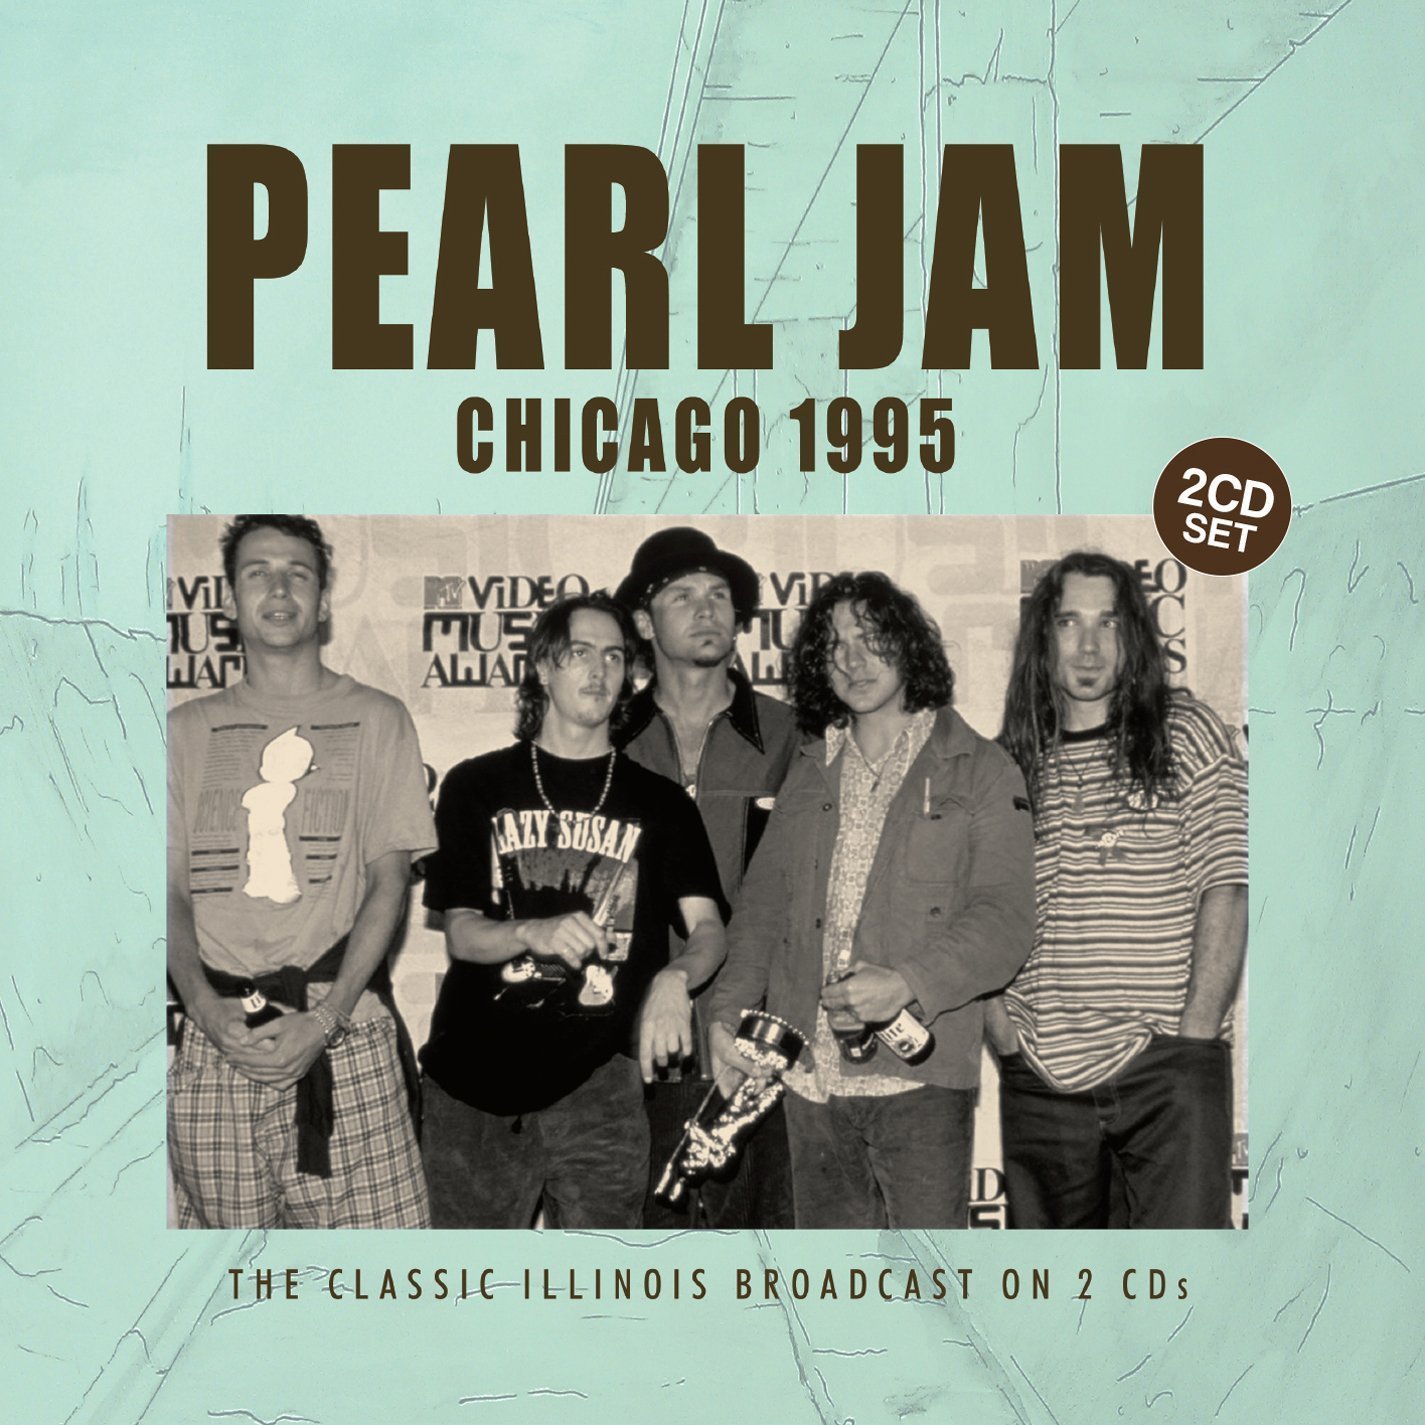 Pearl jam слушать. Pearl Jam 1994. Группа Pearl Jam альбомы. Pearl Jam Chicago 1995. Pearl Jam обложки альбомов.